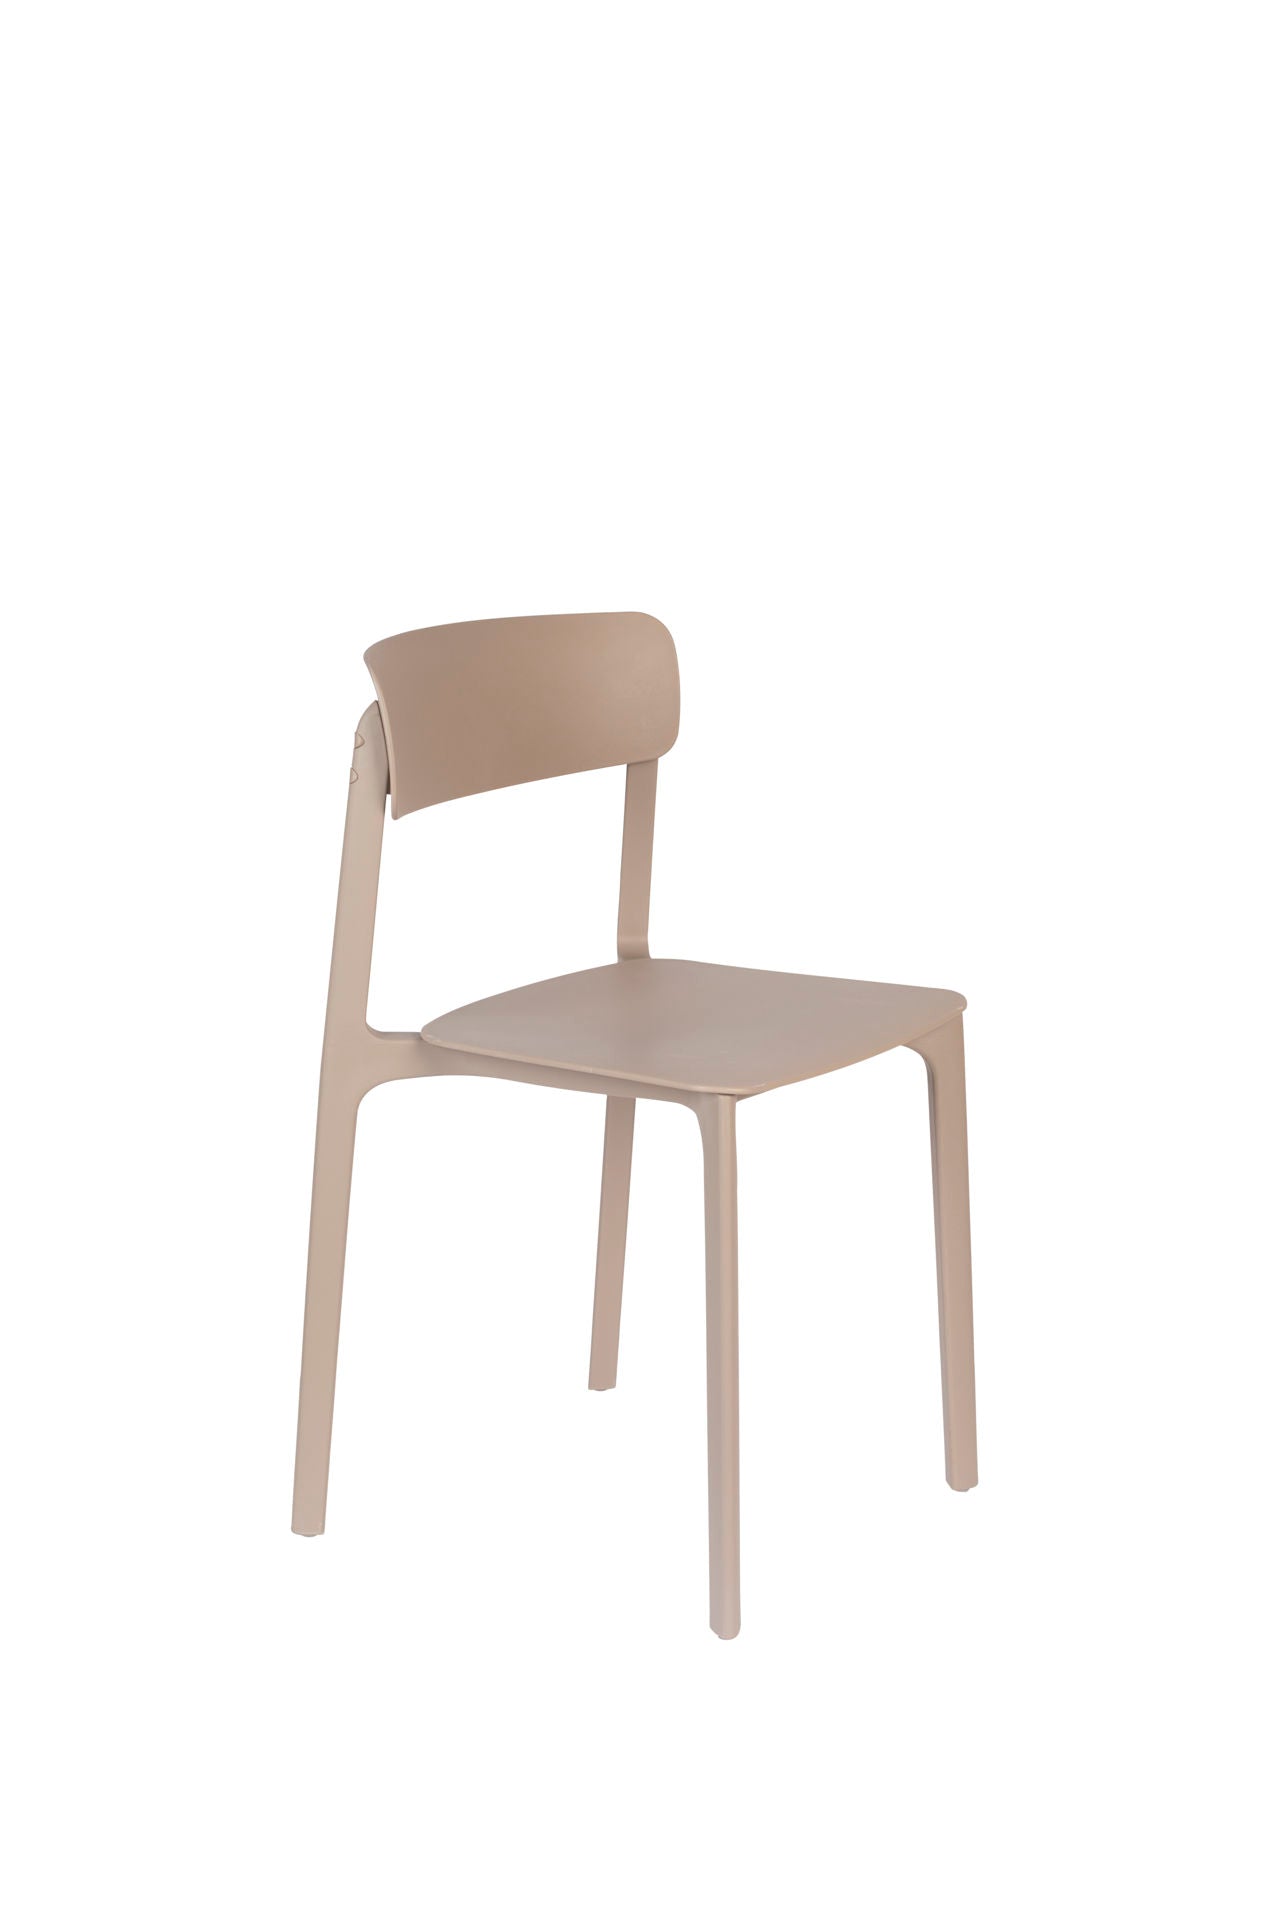 Nancy's Orrville Chair - Retro - Brown - Polypropylene, Plastic - 47 cm x 48 cm x 94 cm